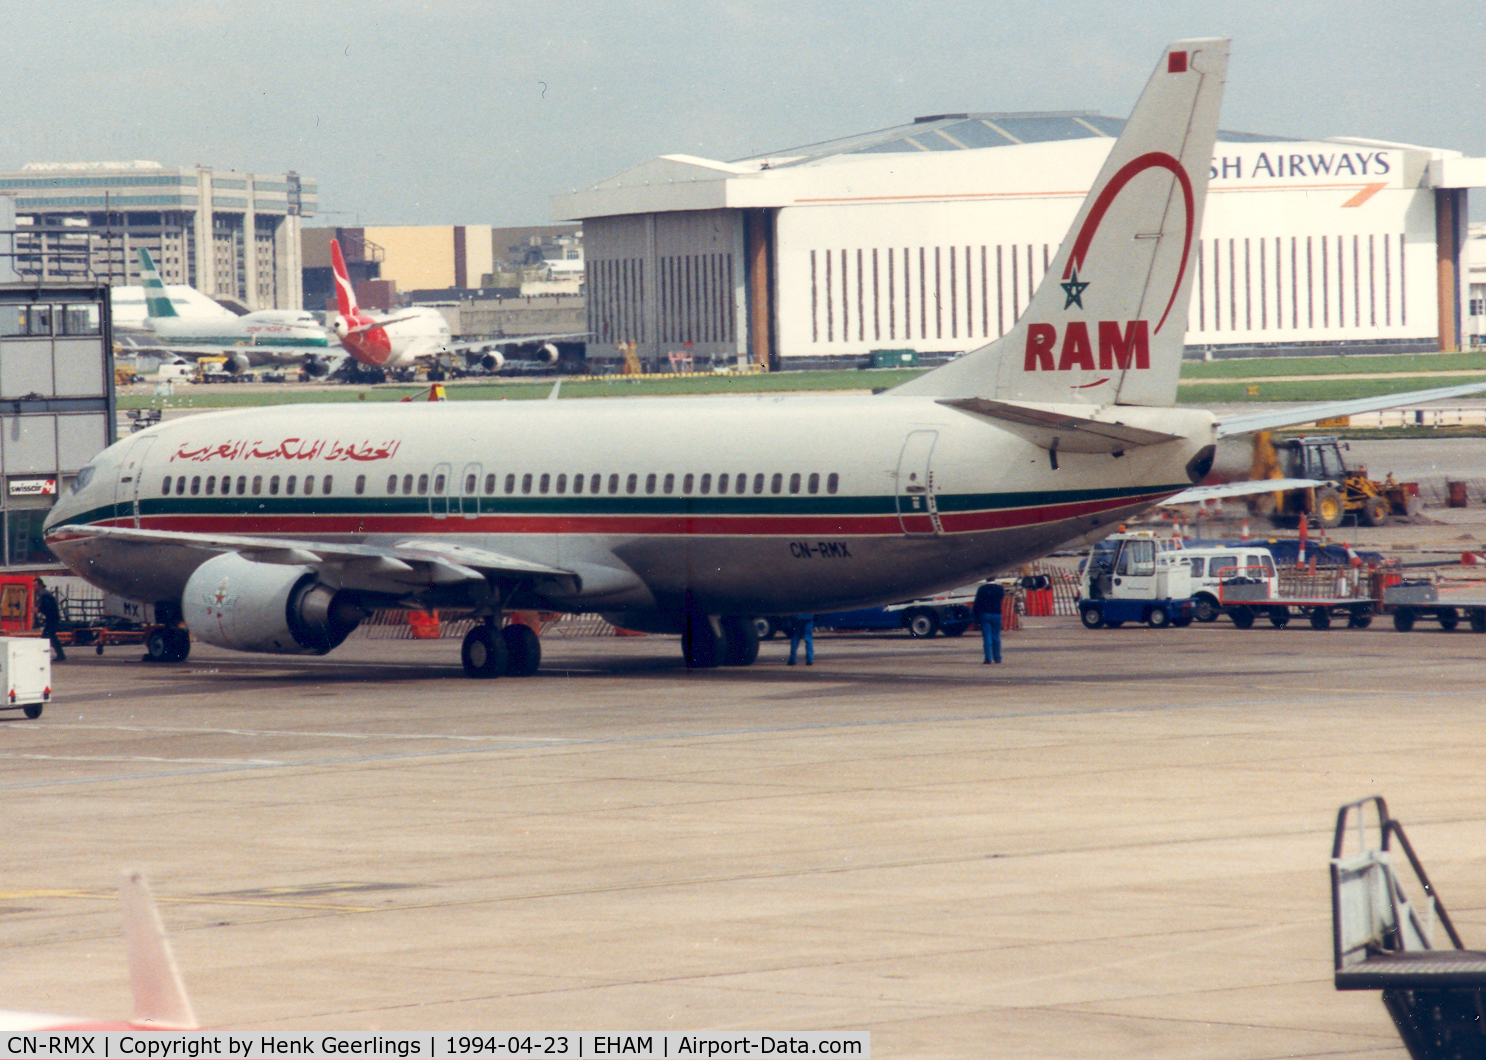 CN-RMX, 1992 Boeing 737-4B6 C/N 26526, royal air maroc - RAM ,